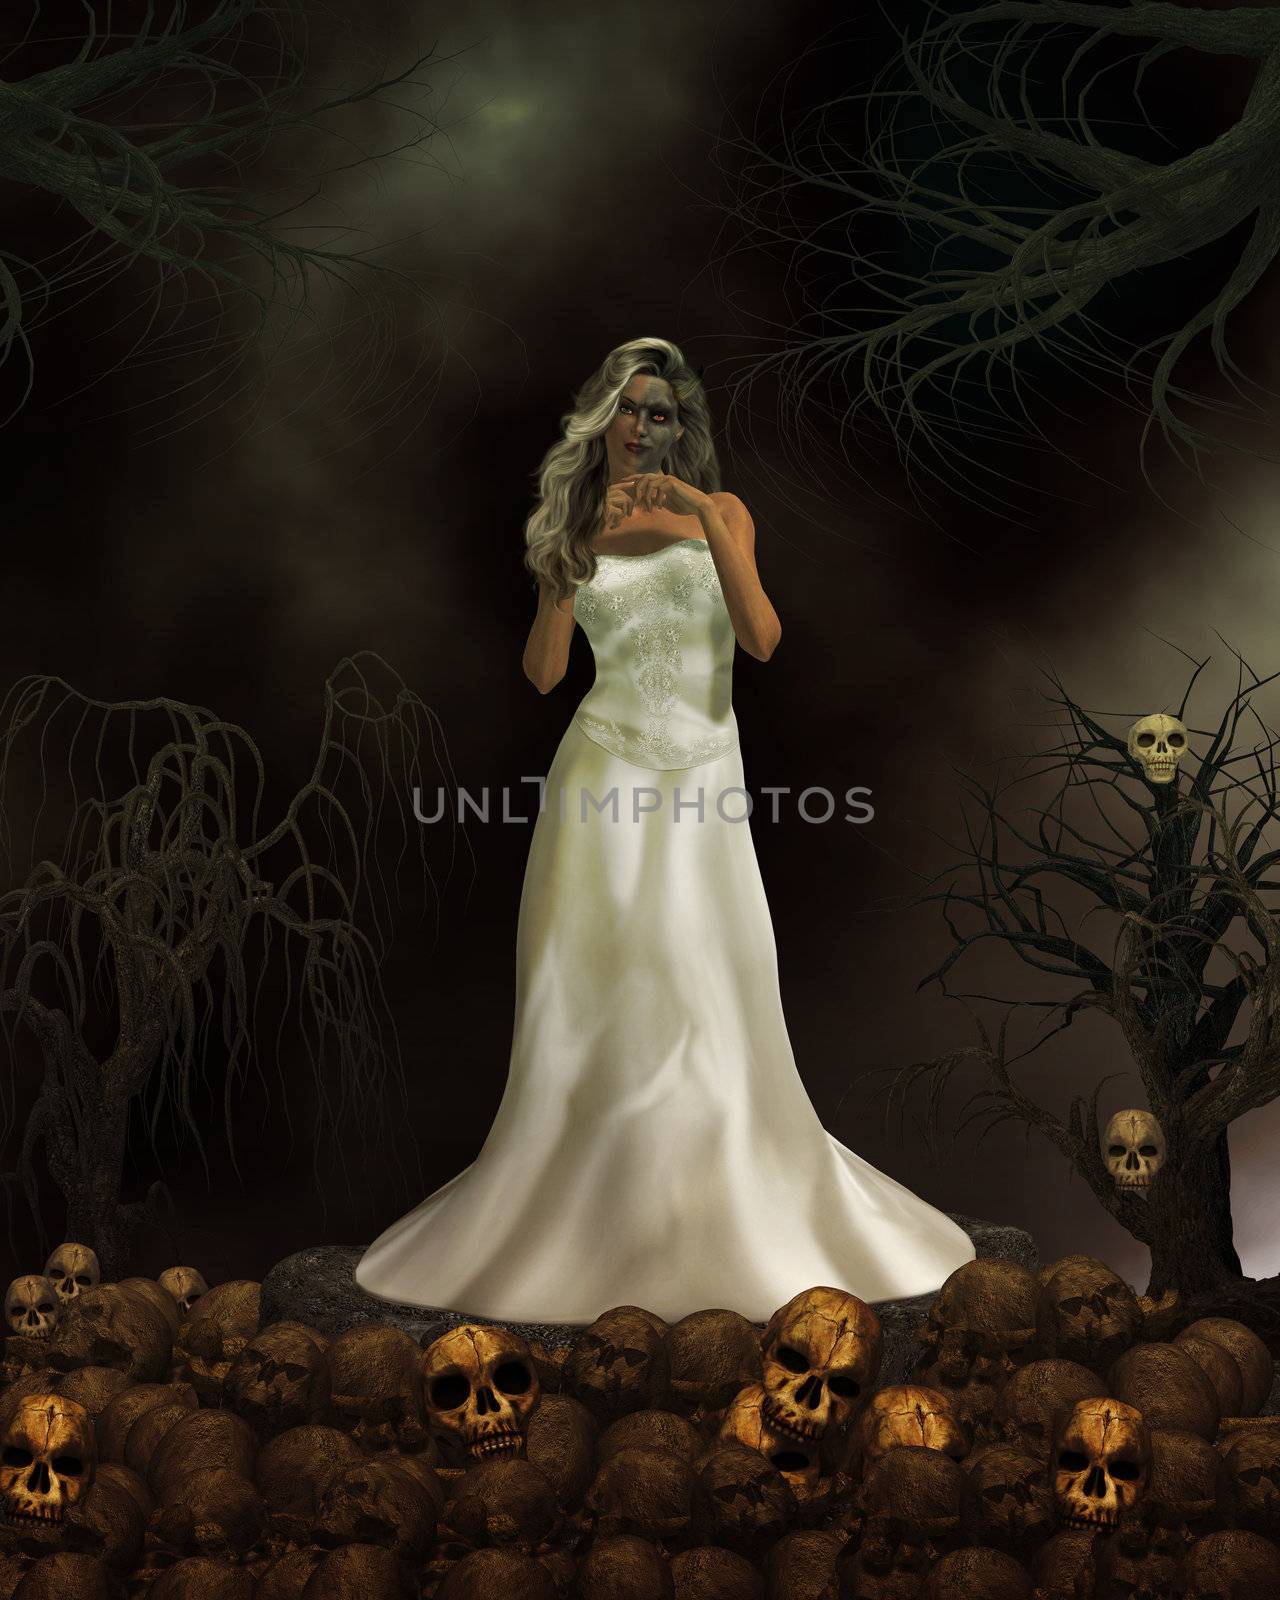 Demon Bride by kathygold